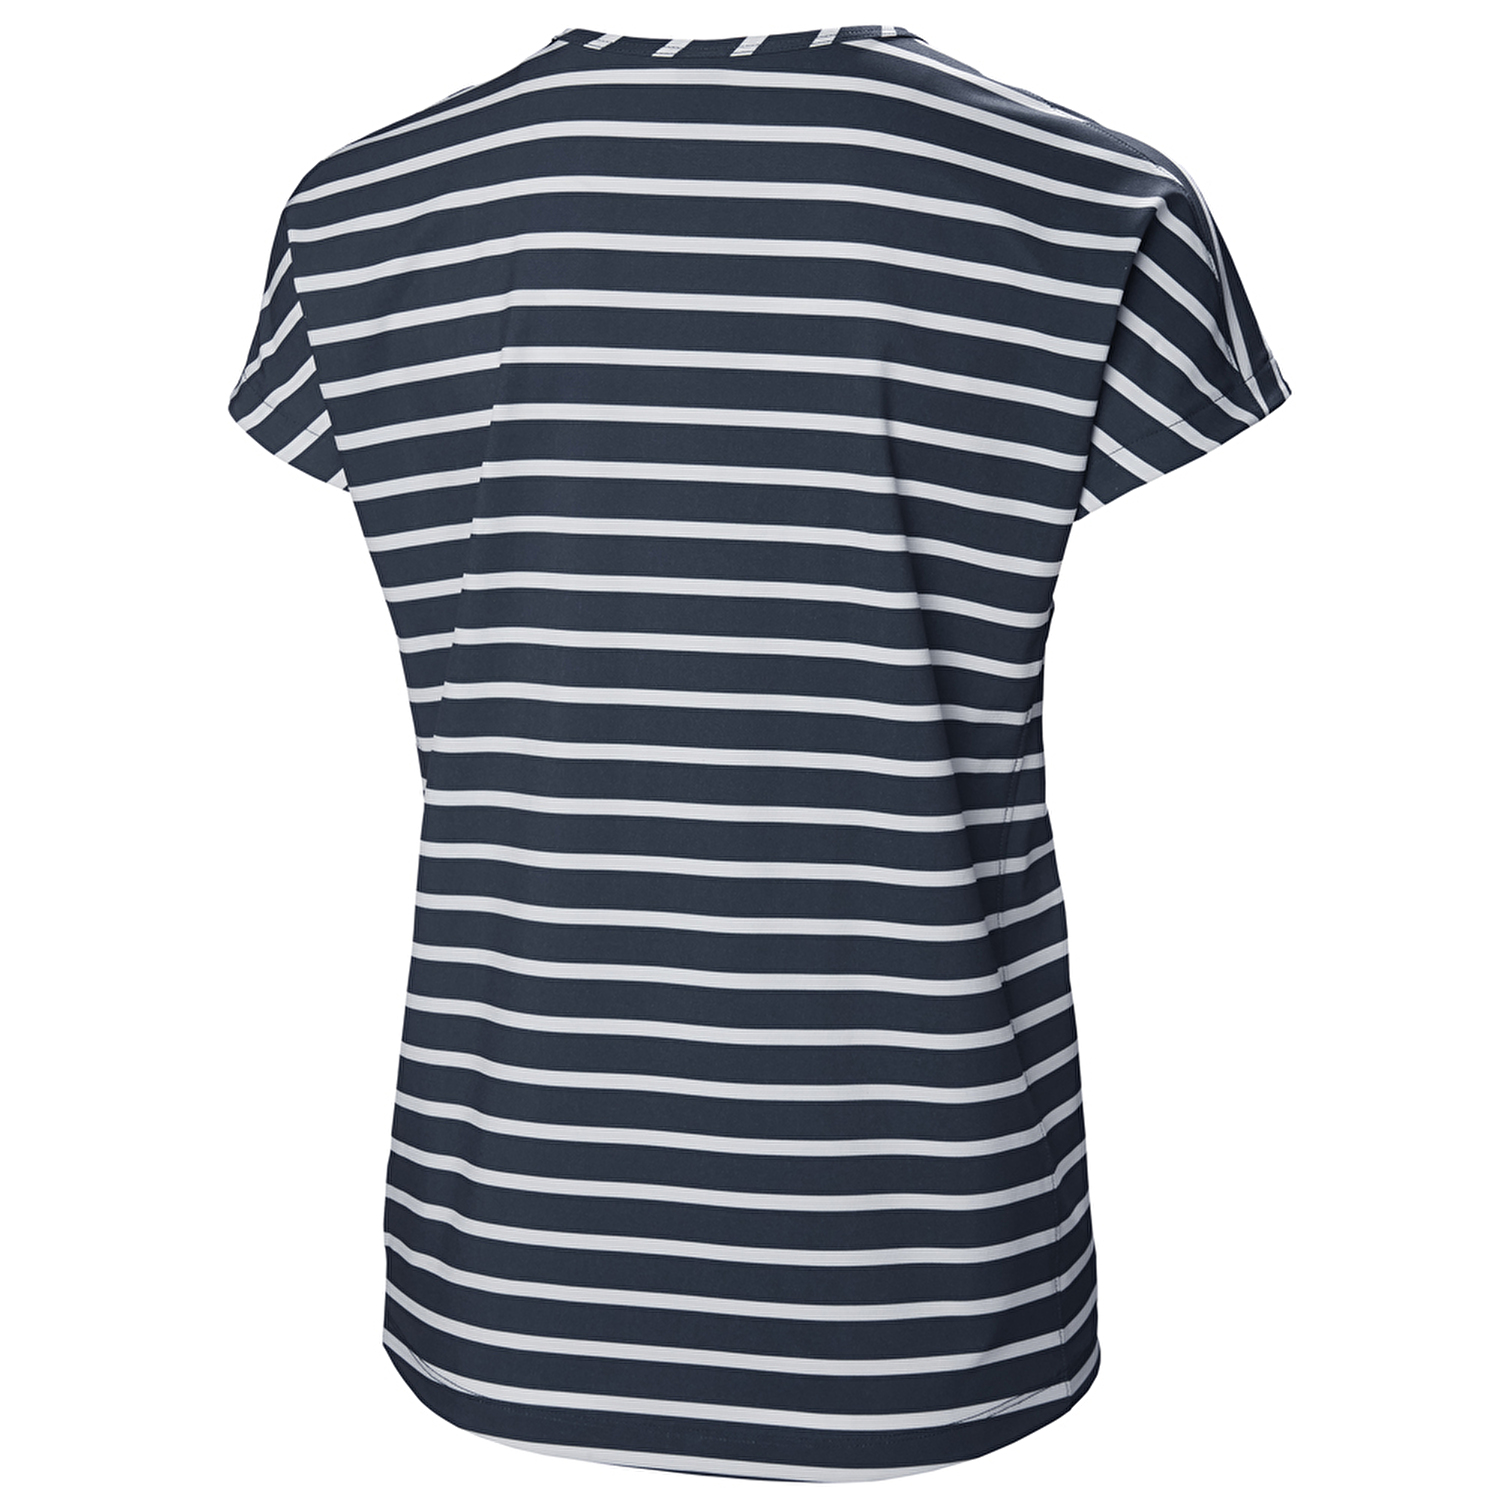 Thalia Summer Top Kadın Kısa Kollu T-Shirt